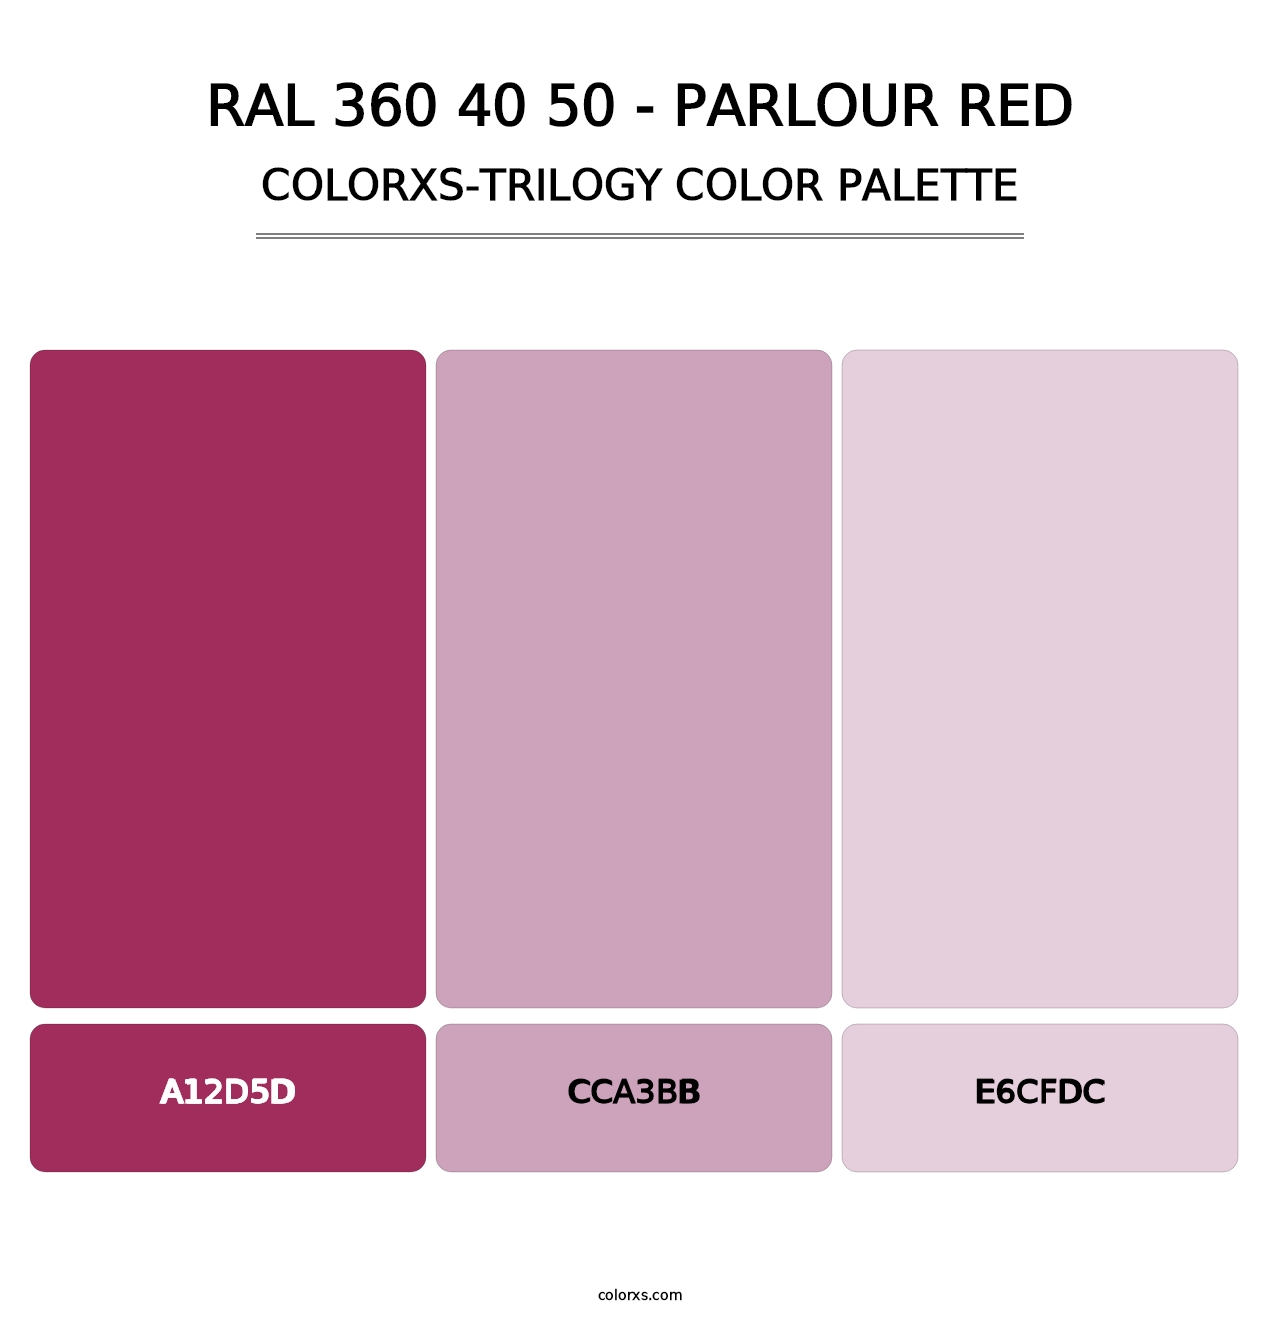 RAL 360 40 50 - Parlour Red - Colorxs Trilogy Palette